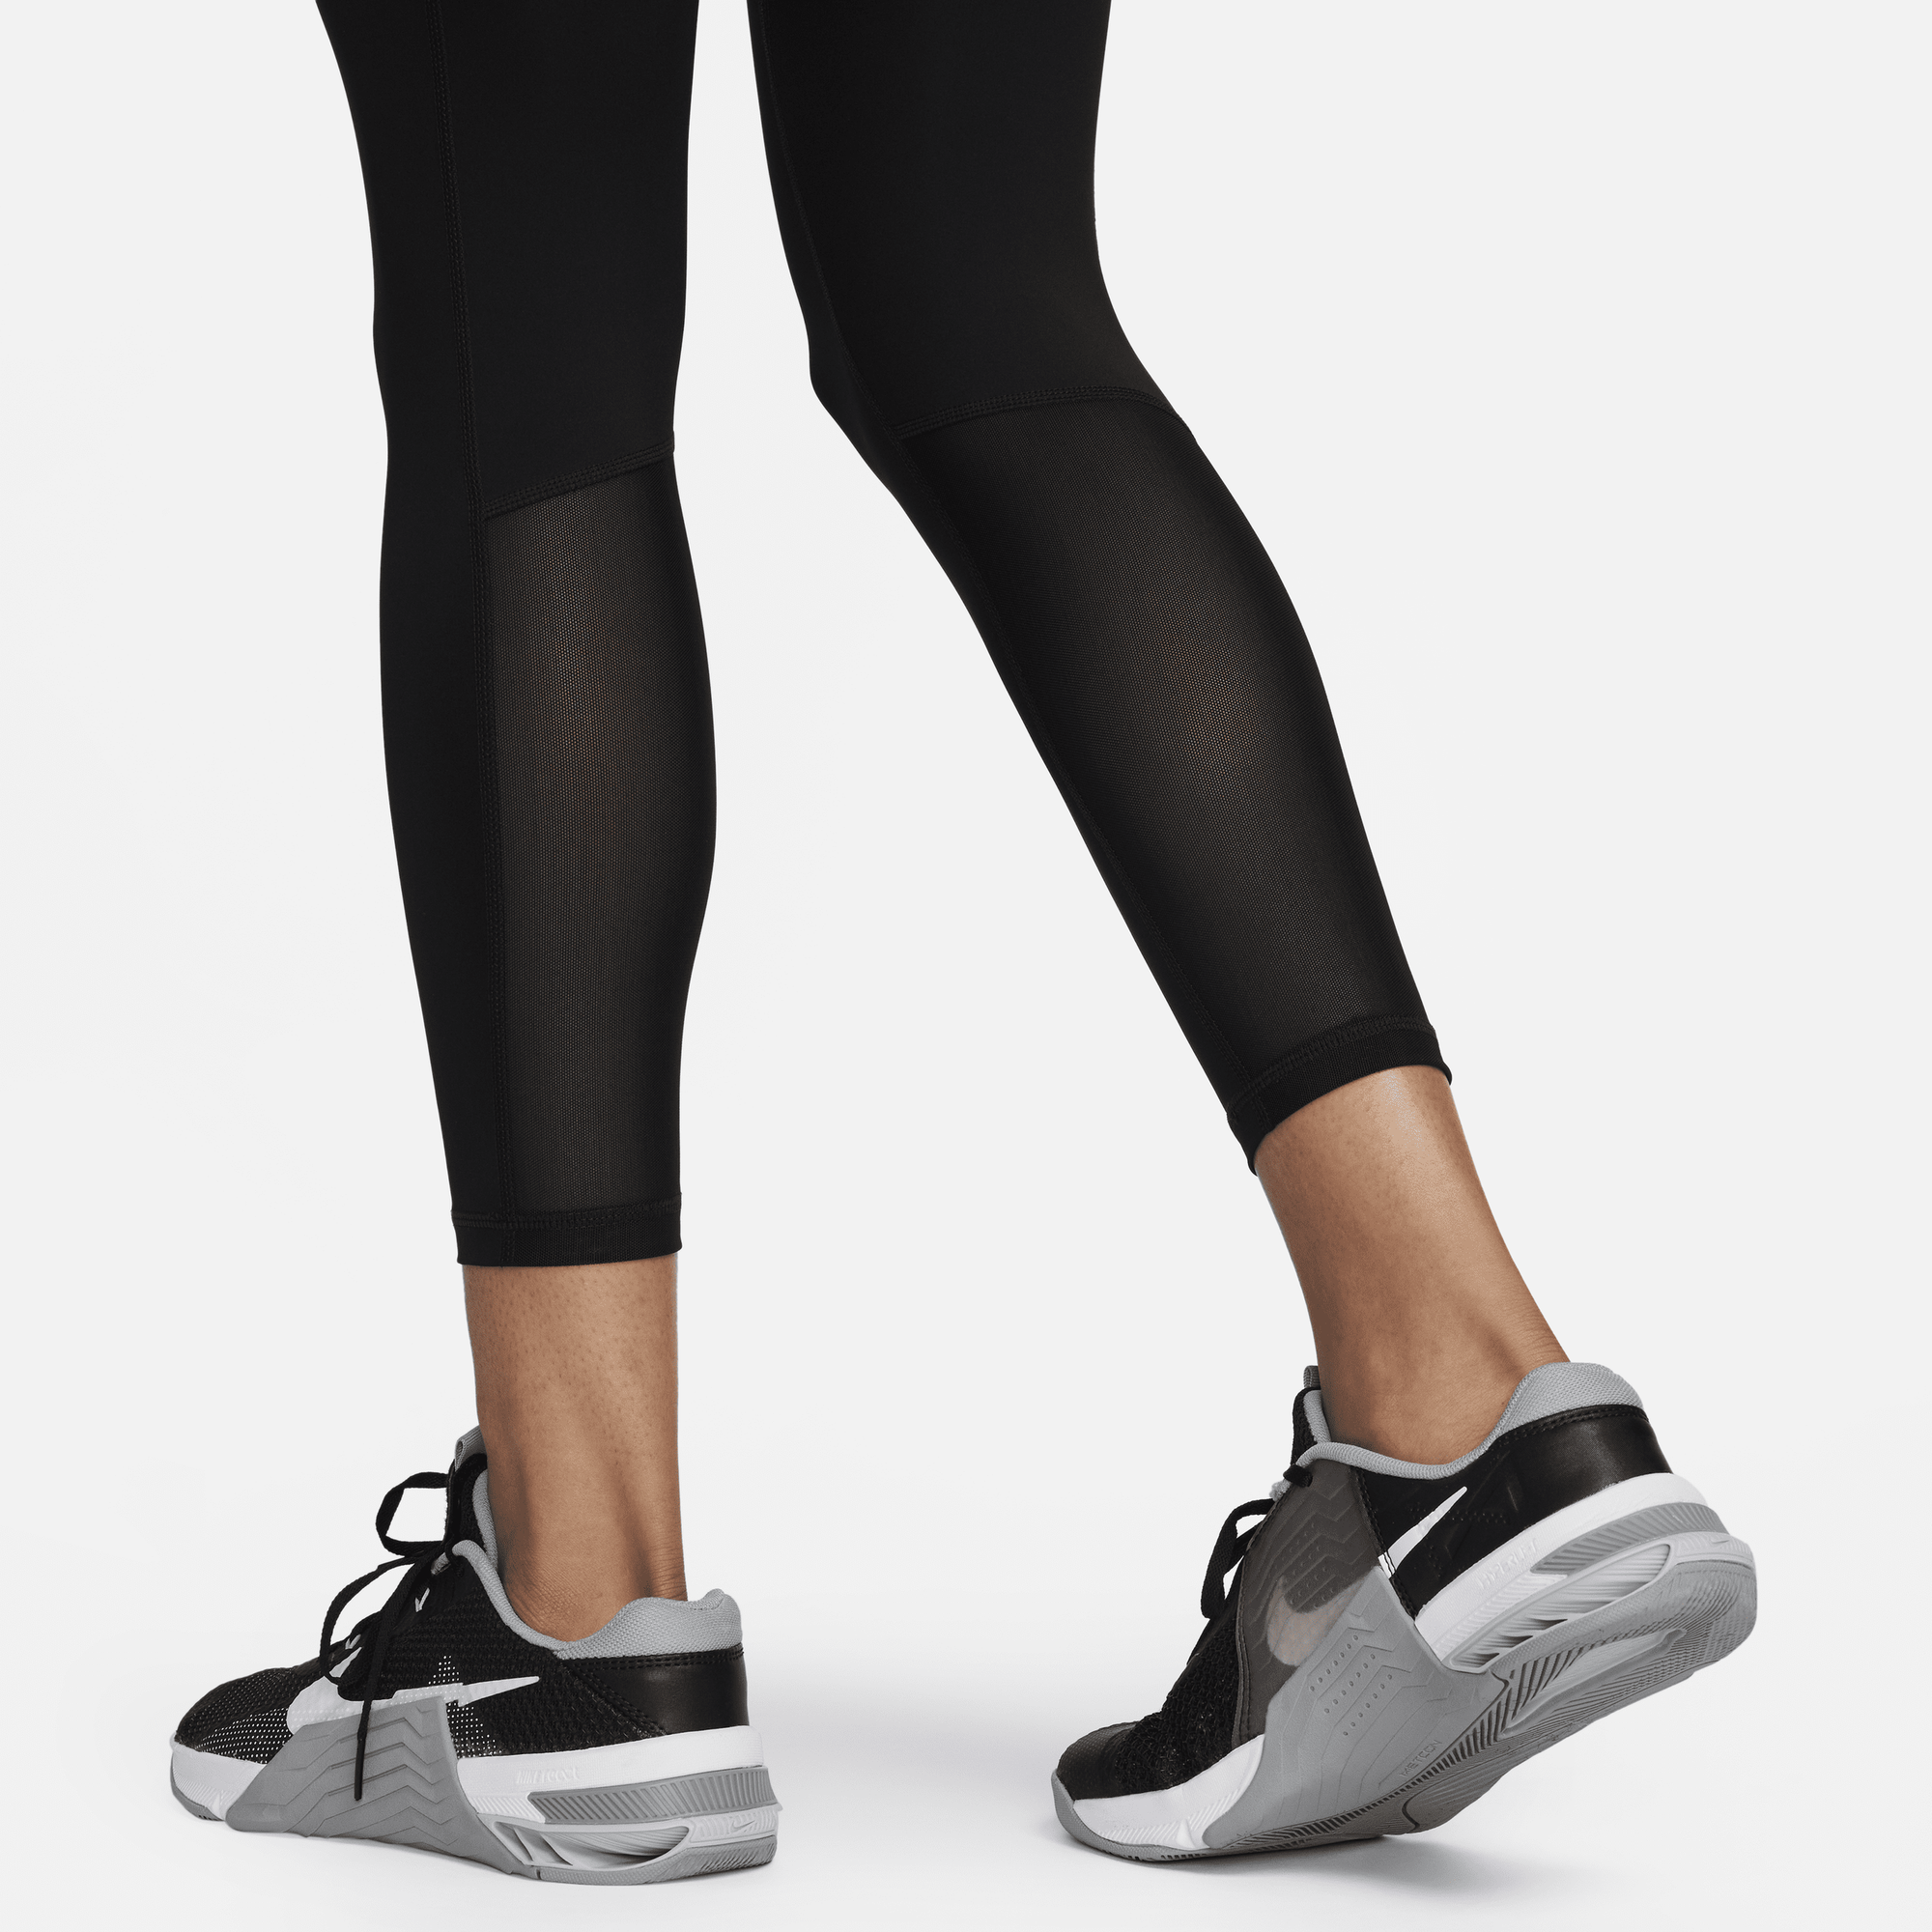 Nike Pro Training Plus 365 7/8 Leggings In Pink, DA0483-684